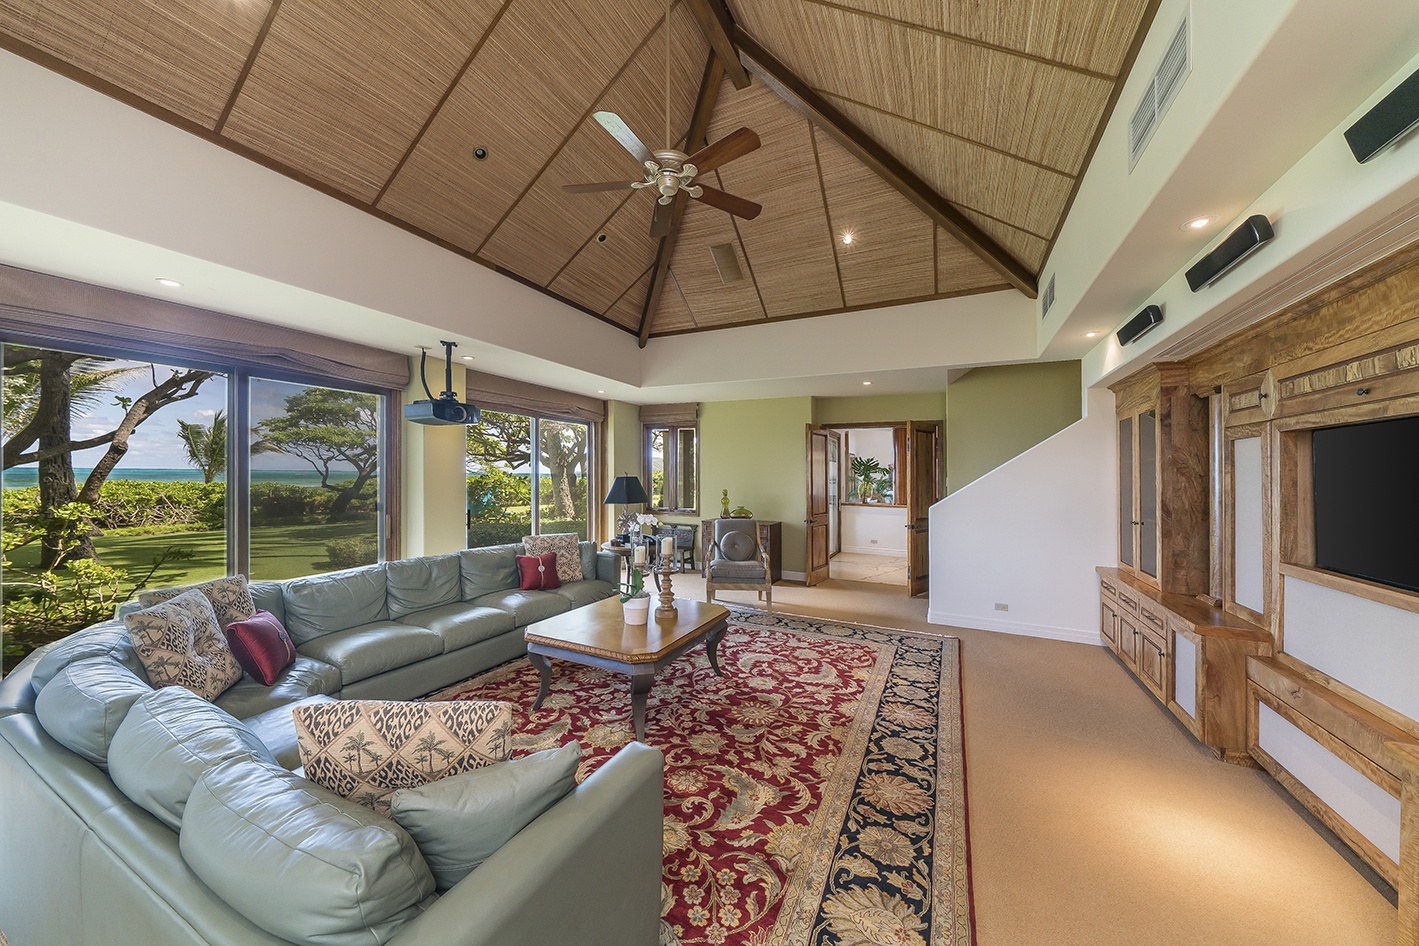 Kailua Vacation Rentals, Kailua's Kai Moena Estate - Main house: Media room with projector